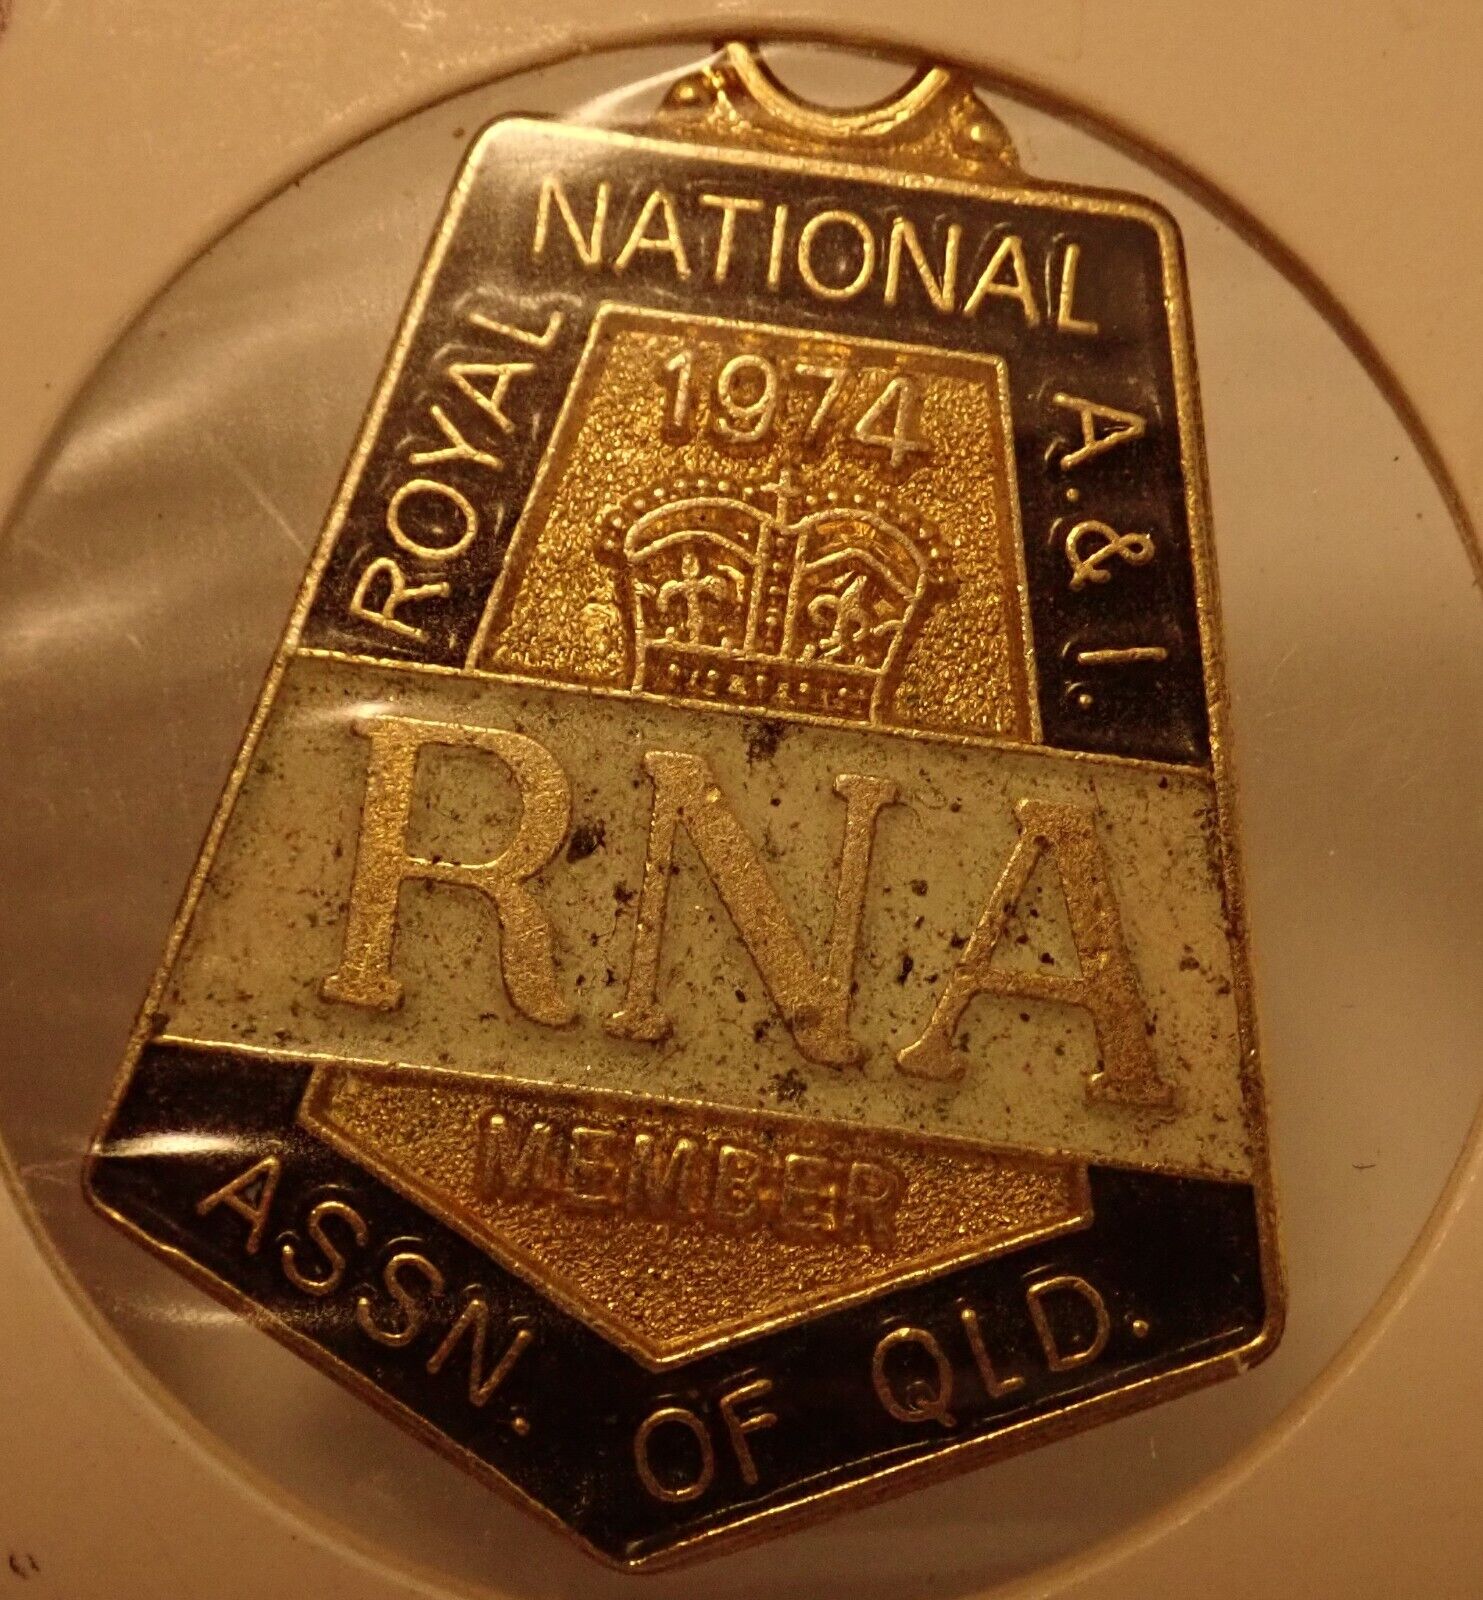 1974 Rna Lady members badge fob